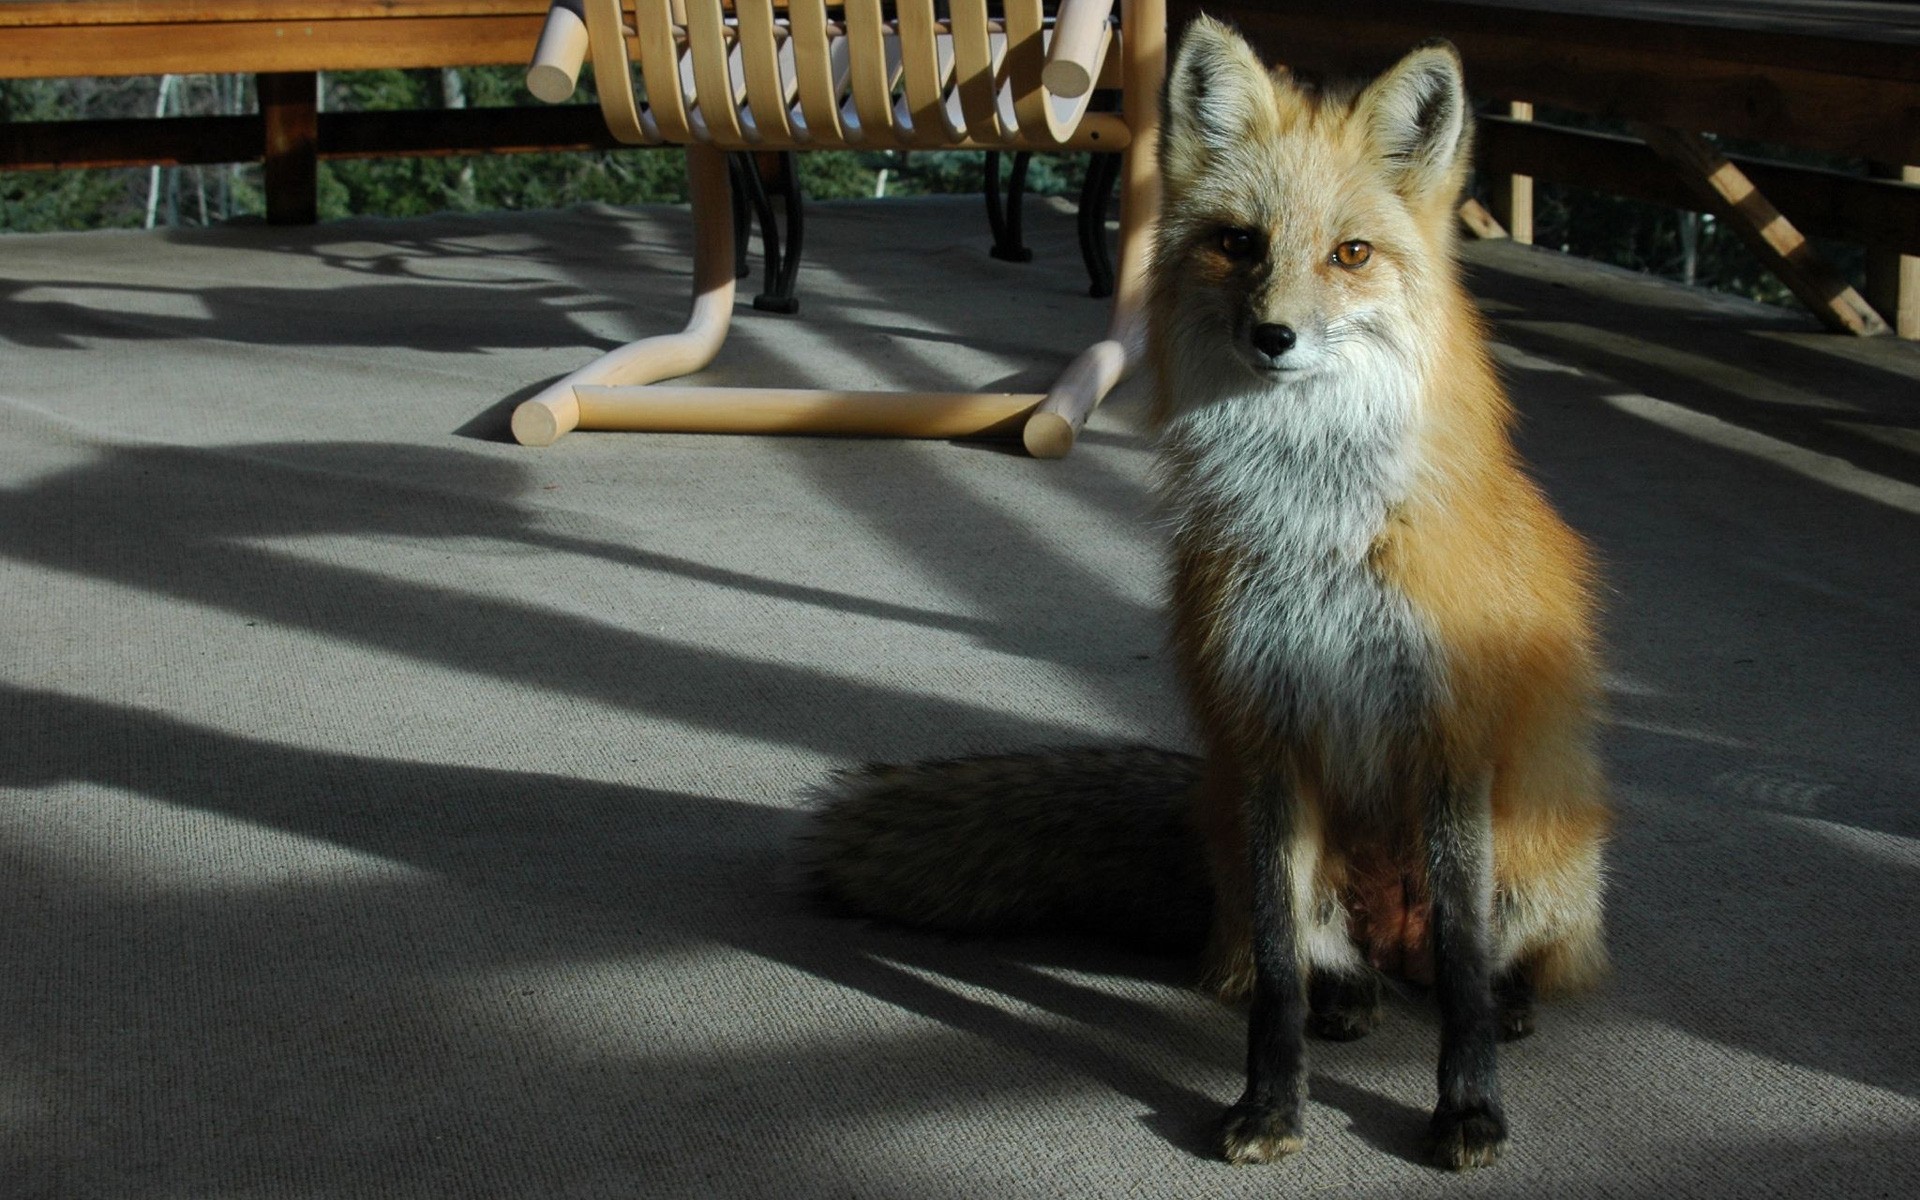 animals mammal fox dog canine street portrait outdoors wildlife cute blur animal